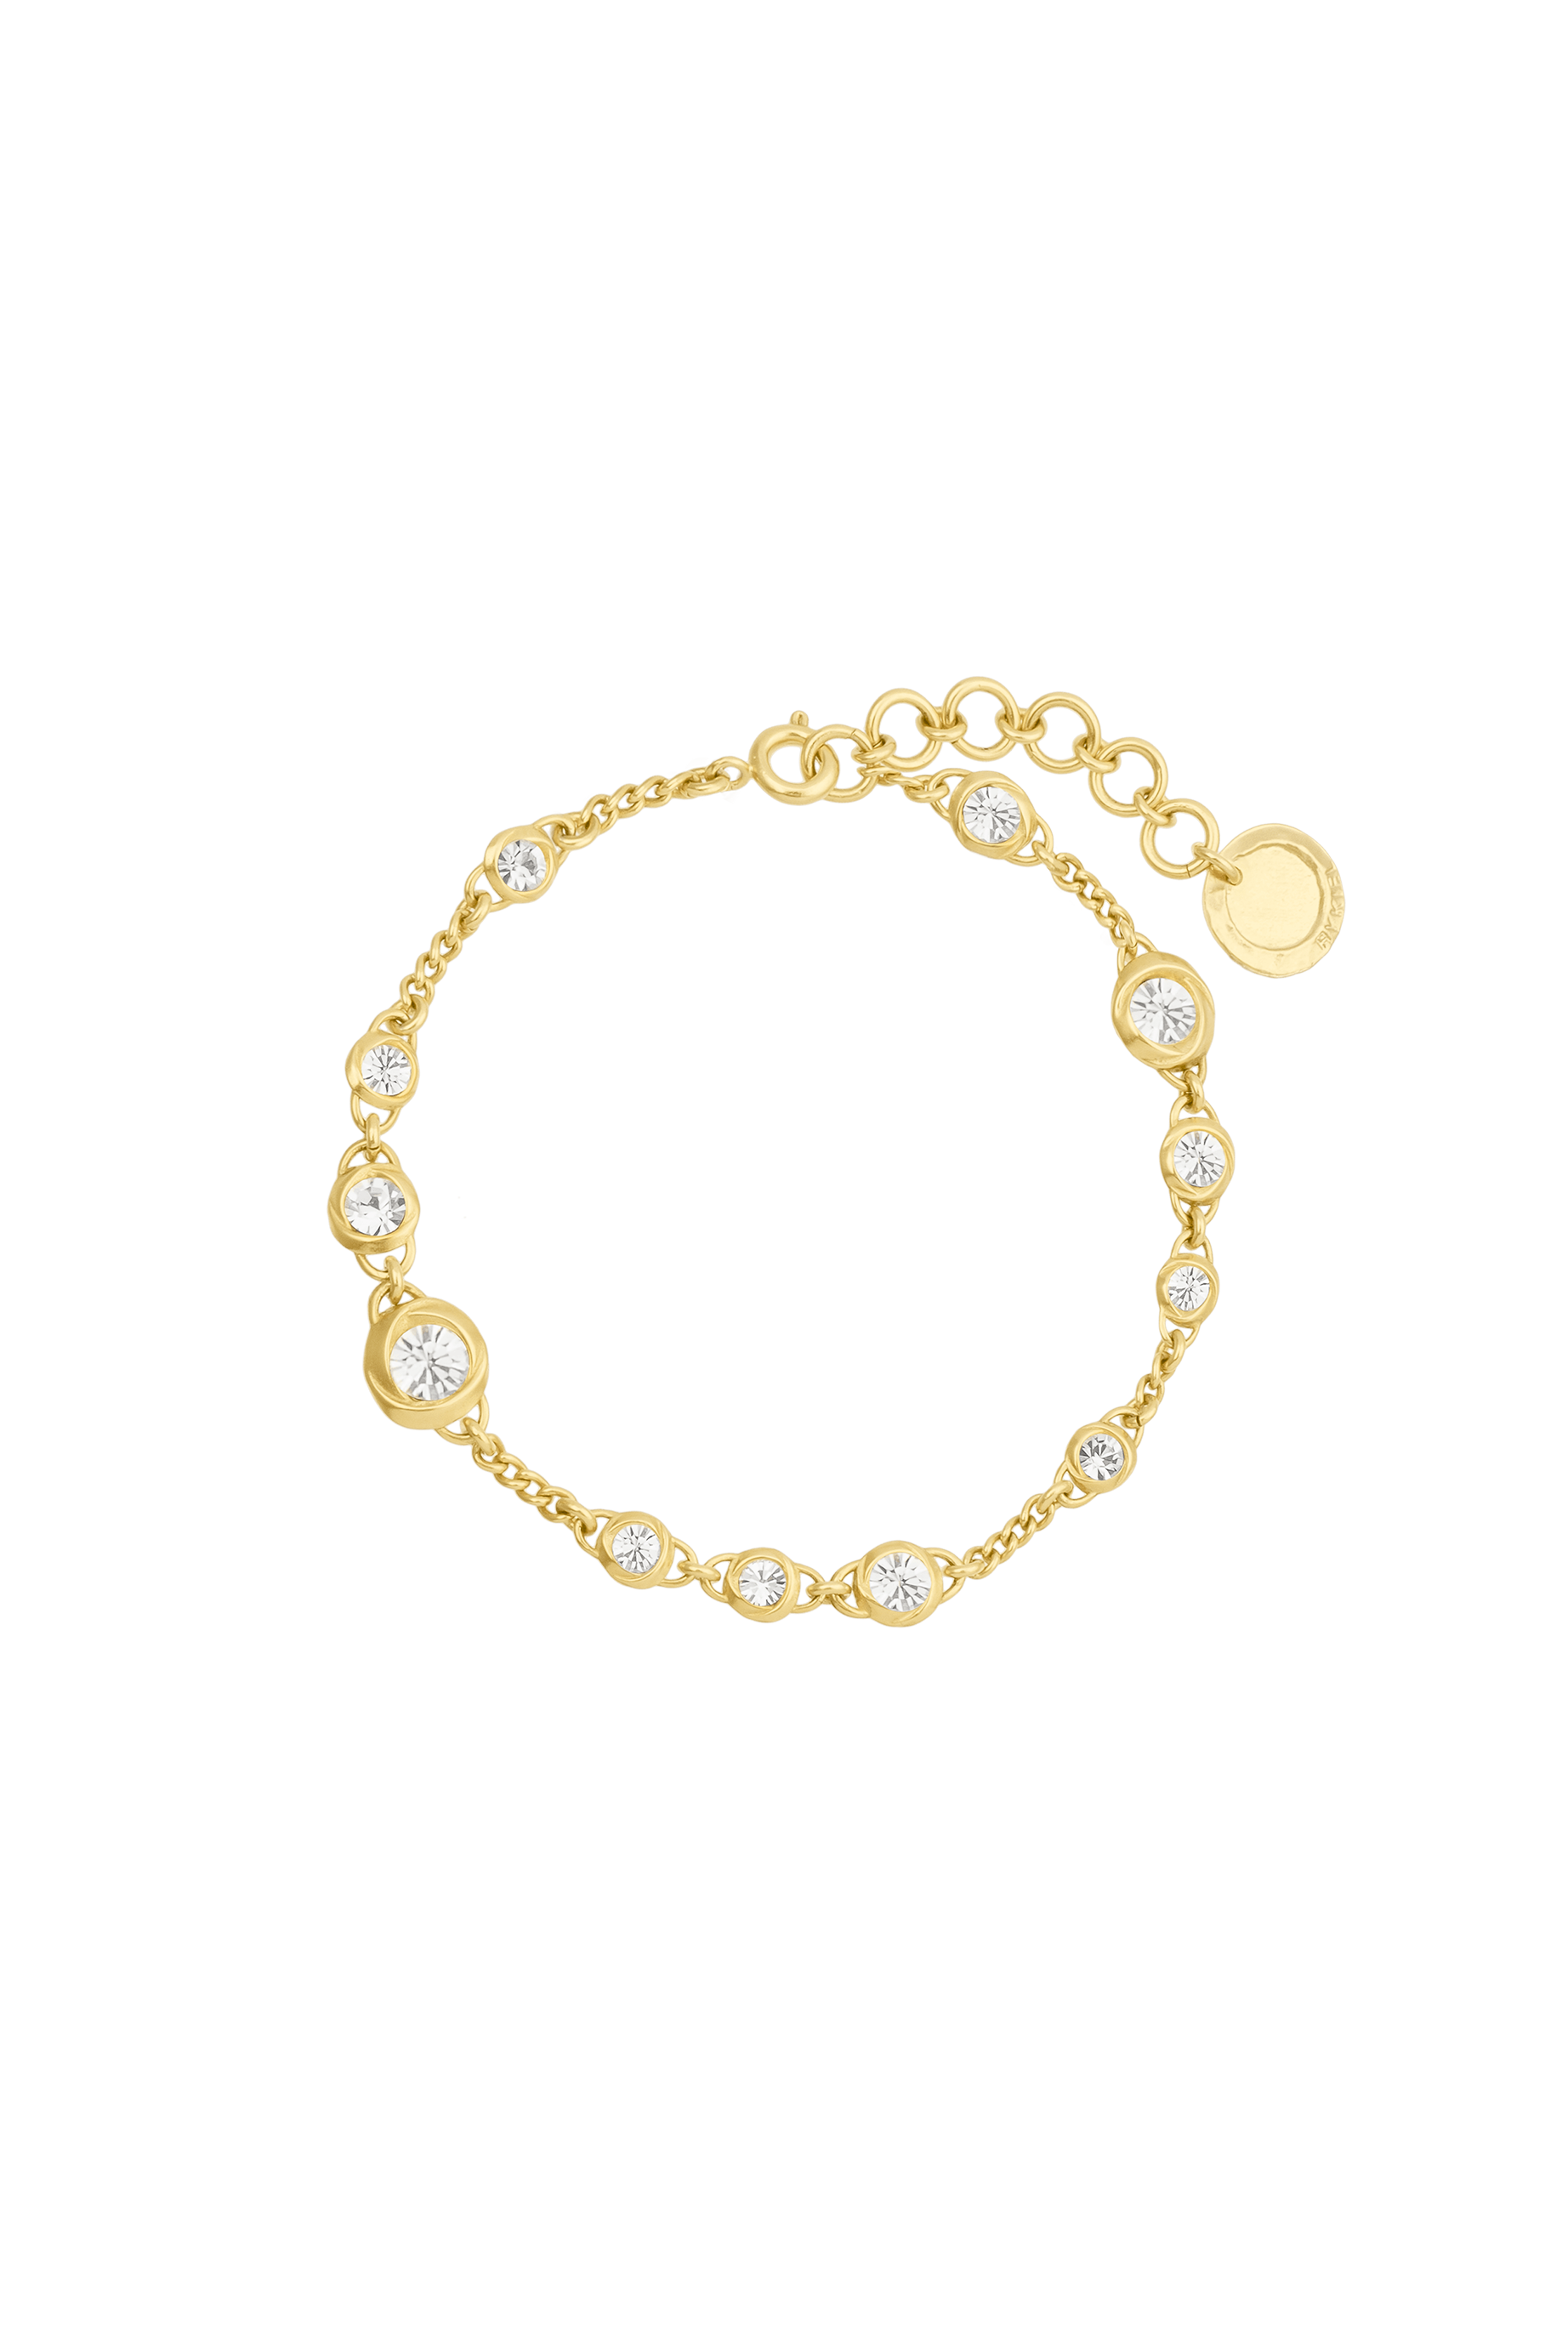 Bracelet 001 – Choudhary Gold